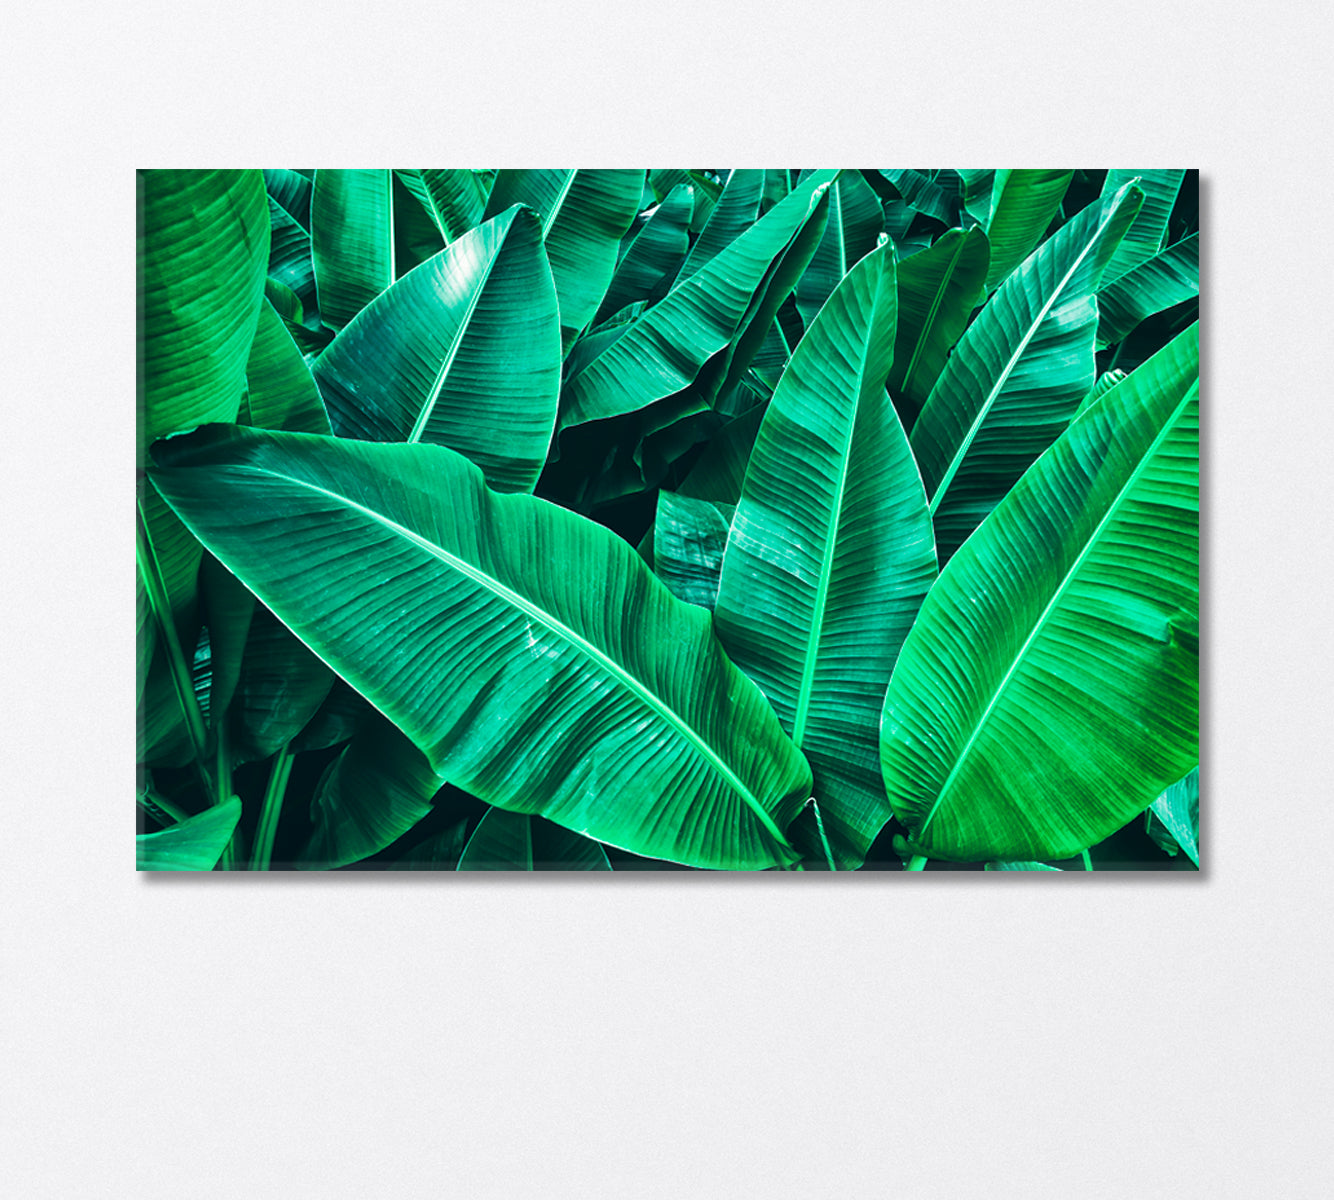 Tropical Banana Leaves Canvas Print-Canvas Print-CetArt-1 Panel-24x16 inches-CetArt